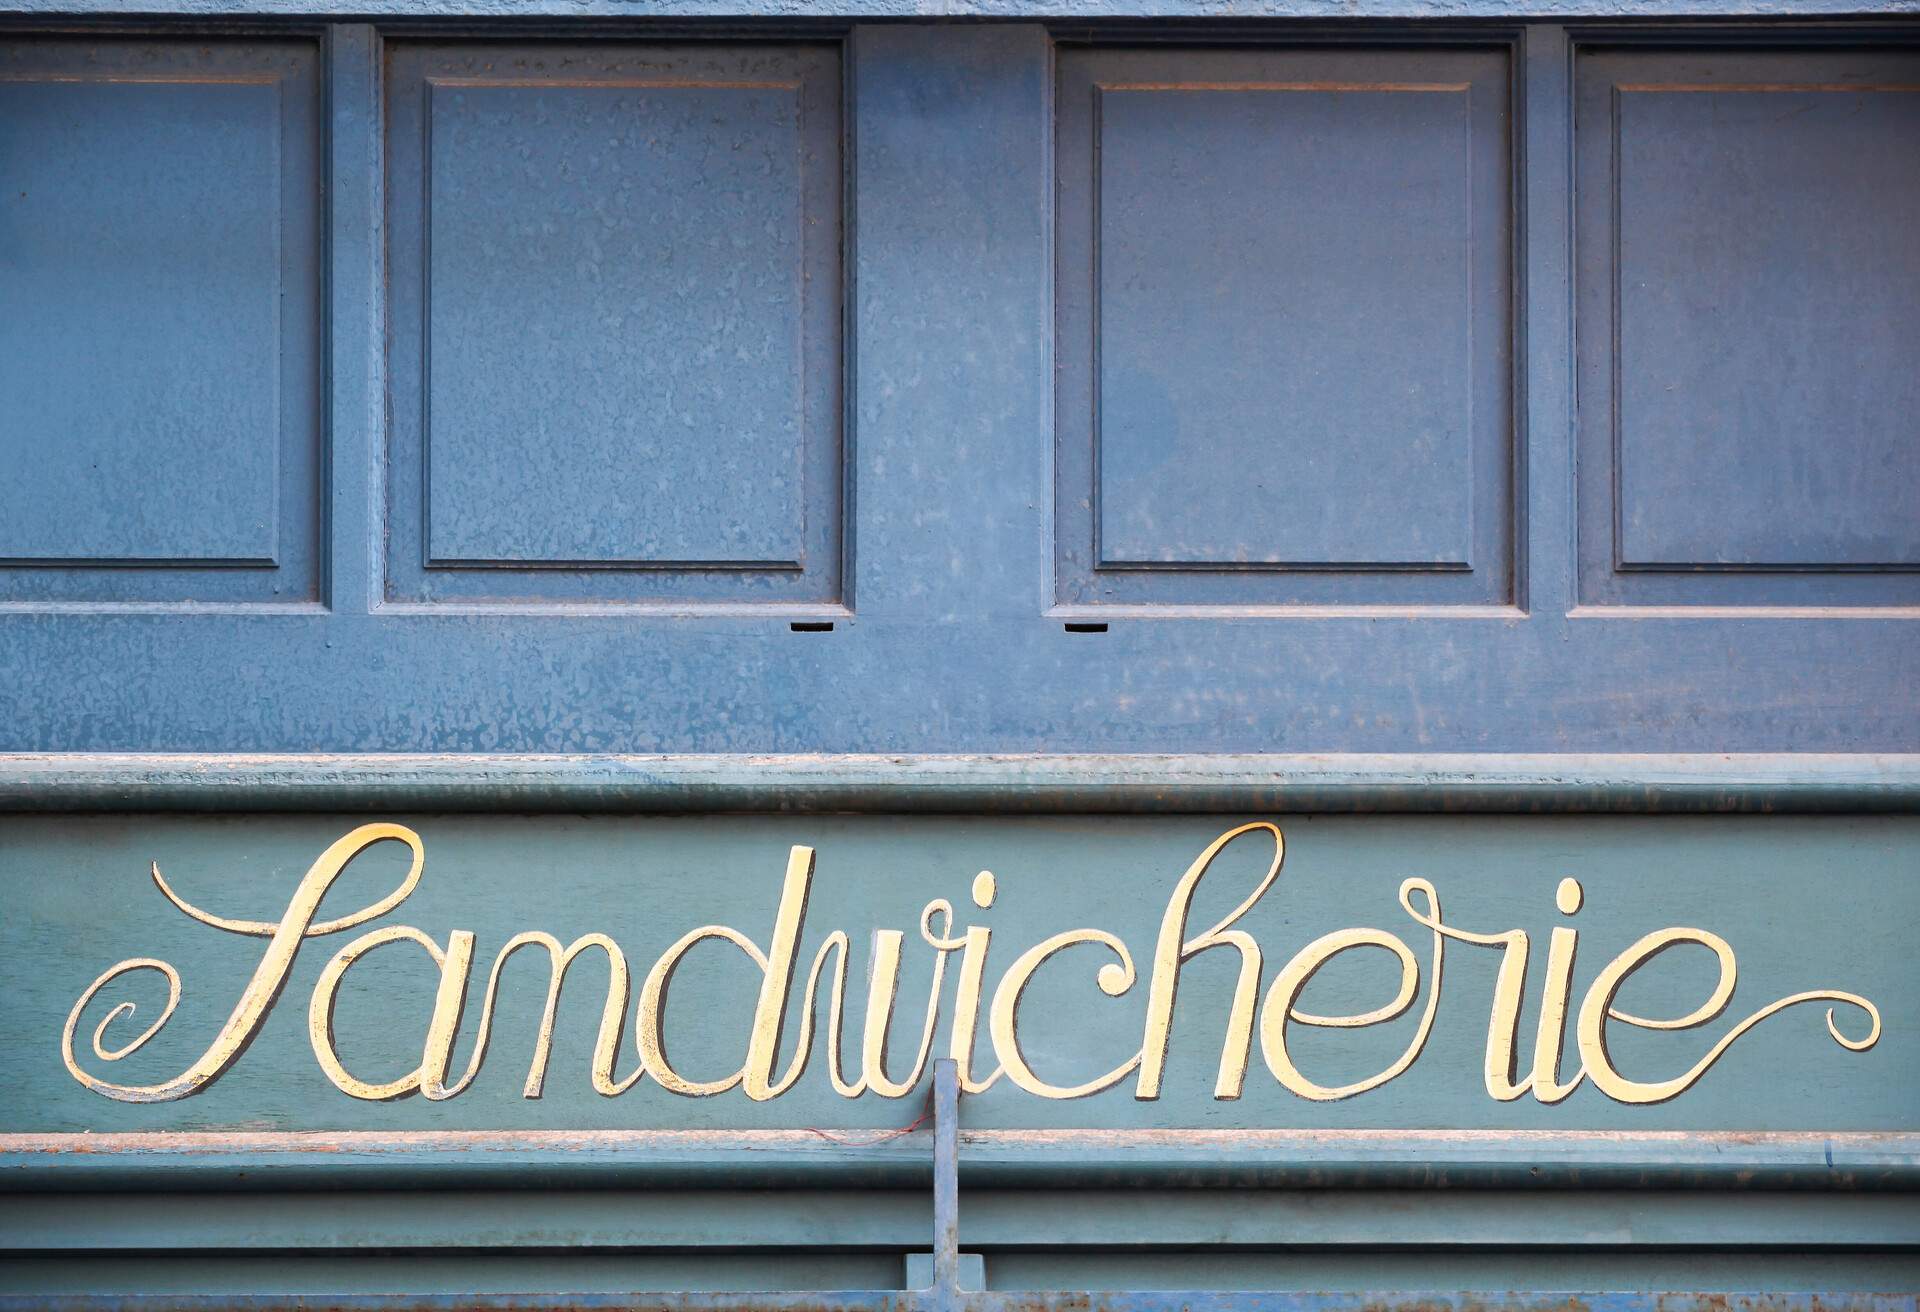 Sandwich shop called sandwicherie in french language